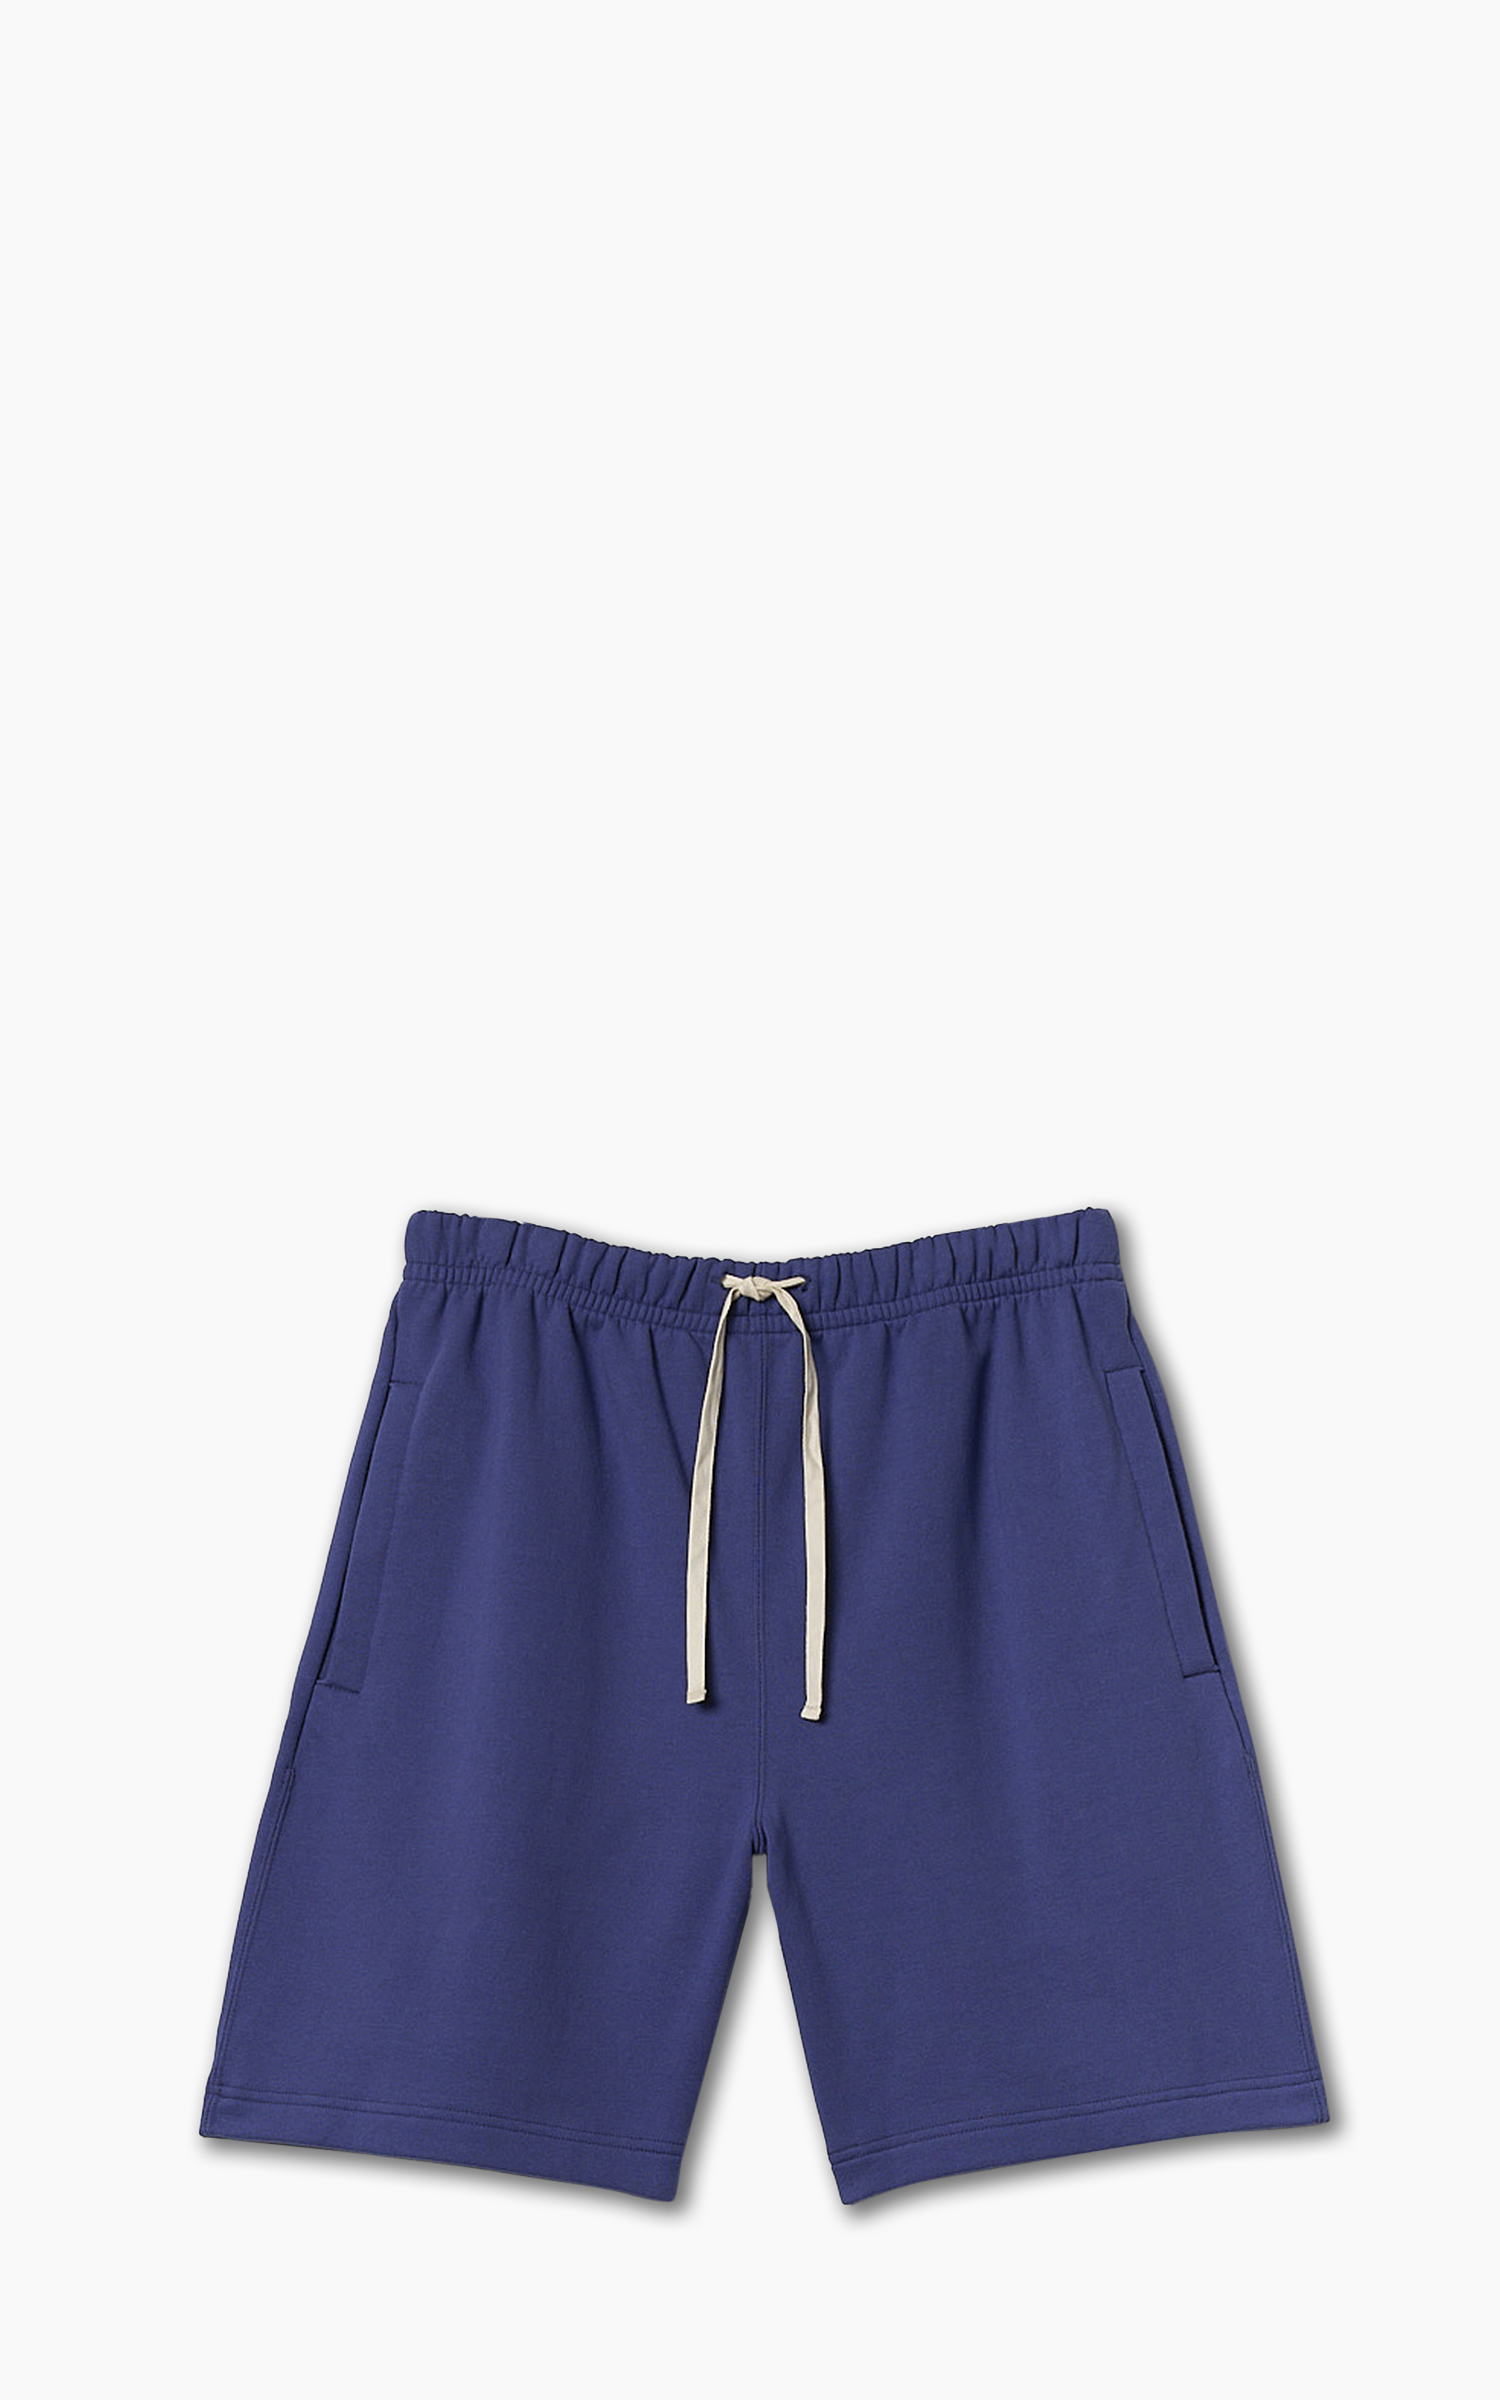 Merz b. Schwanen 356 Sweat Shorts Pacific | Cultizm